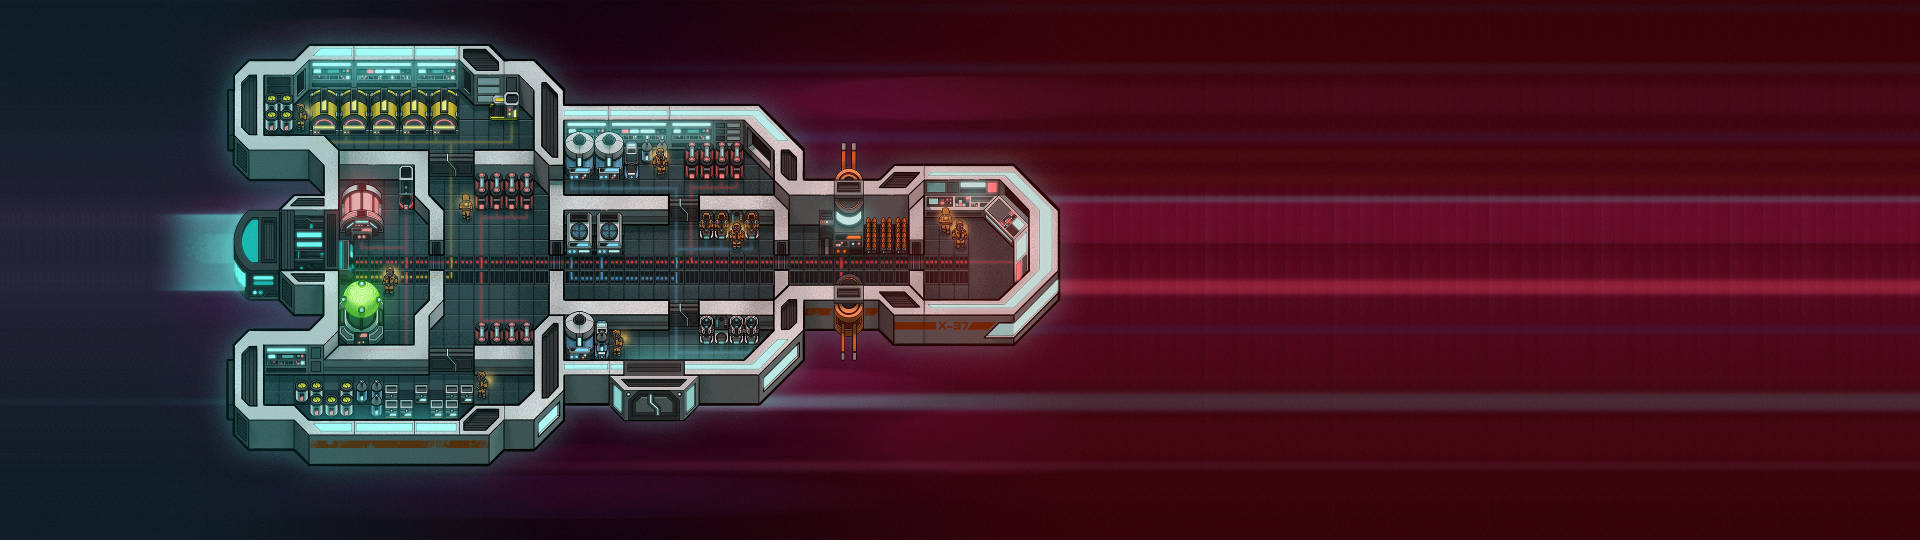 Irisan Perangkat Lunak Introversi Pengembang Arsitek Penjara Starship Terakhir